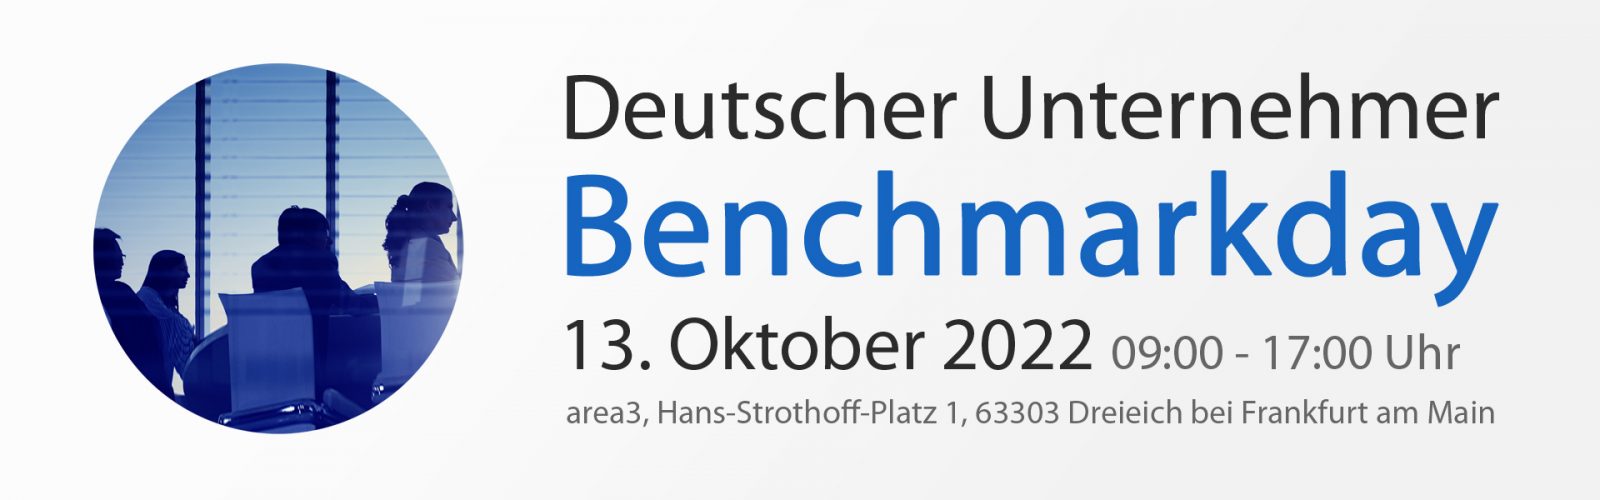 Benchmarkday 2022